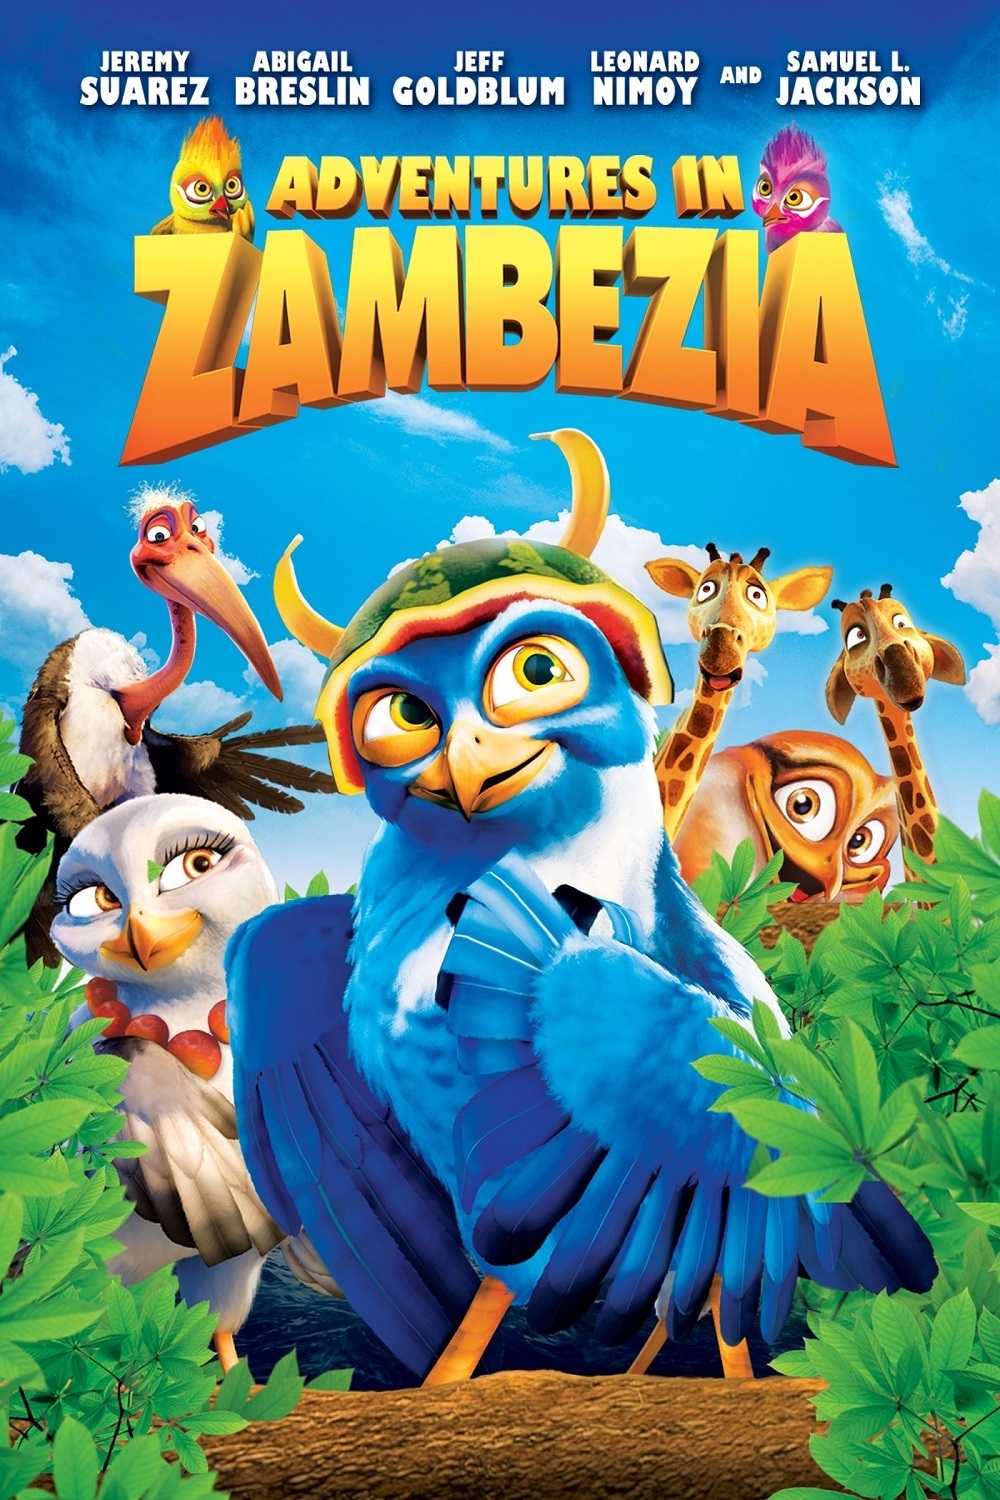 2012 Zambezia